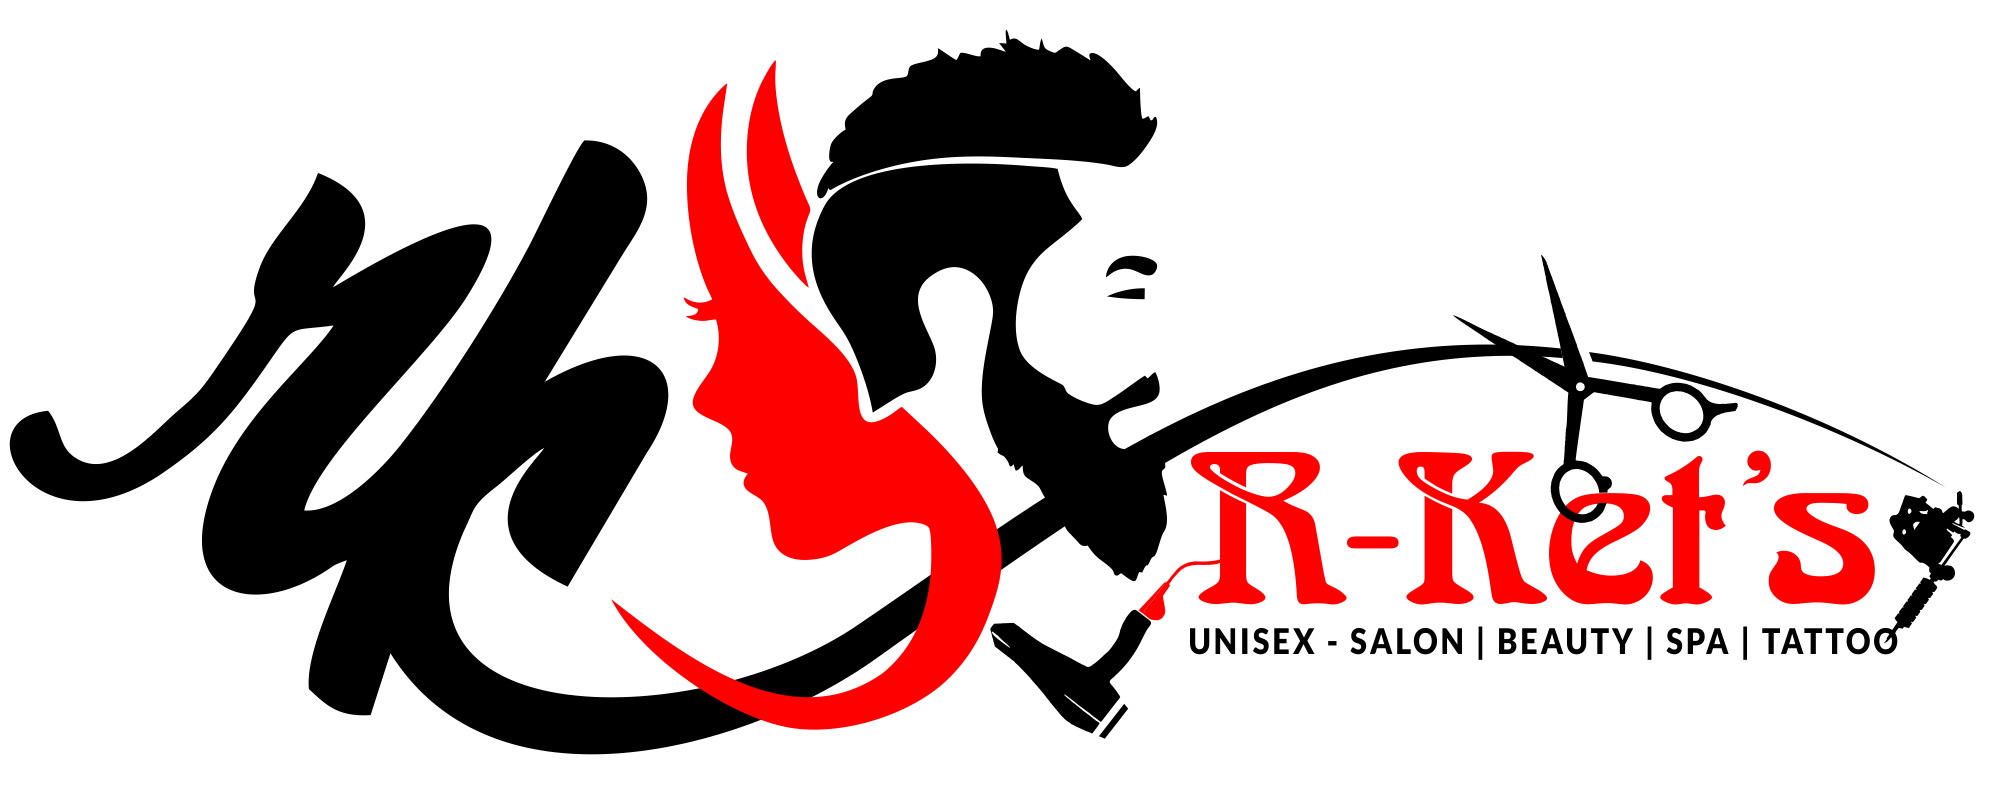 R-Ket's Unisex Salon Logo